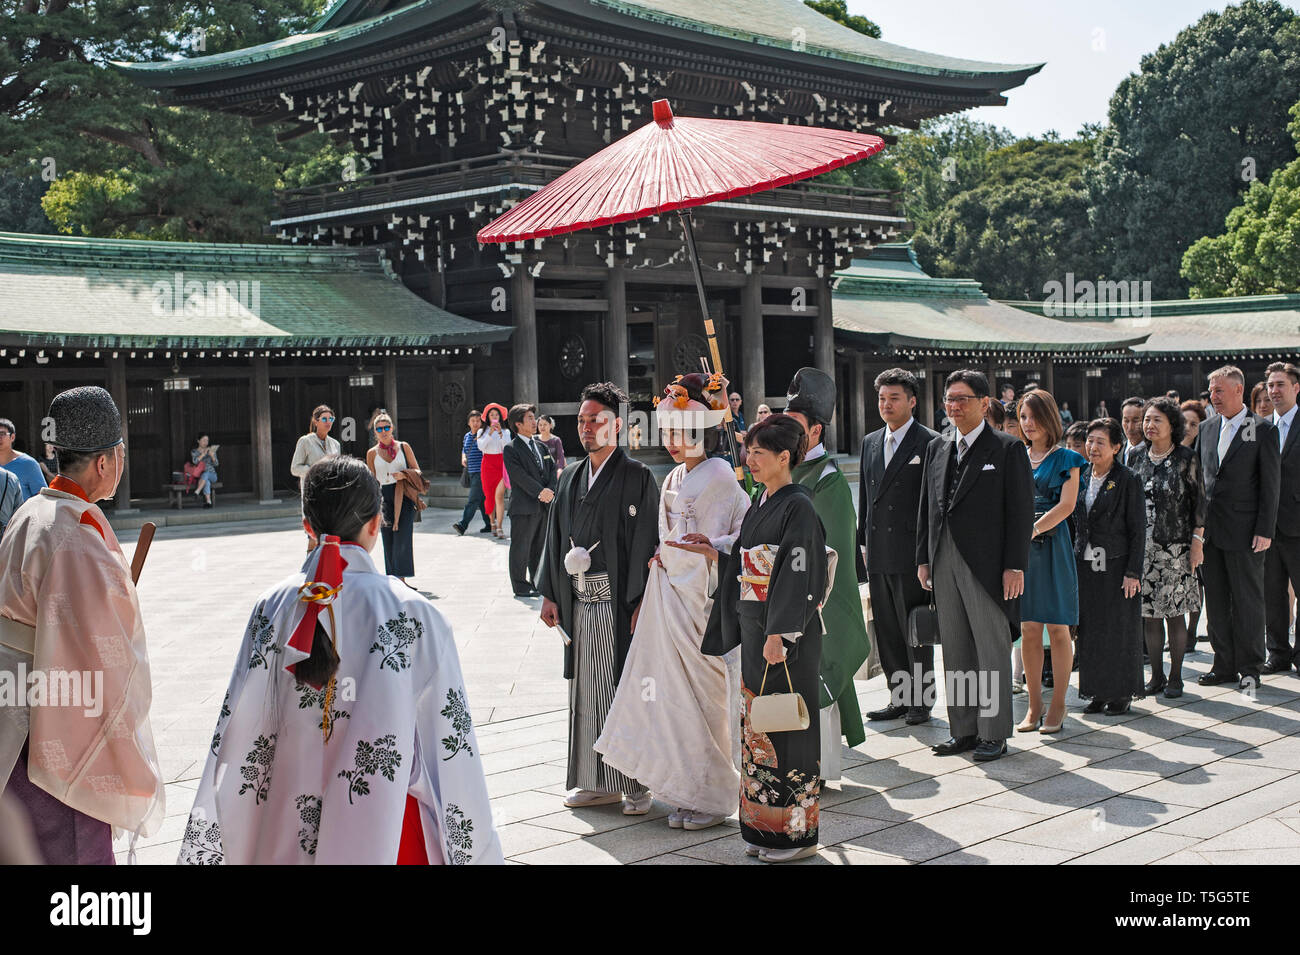 Wedding party in the Meiji Jingu, (Meiji Shrine) grounds at Shibuya, Tokyo, Japan Stock Photo